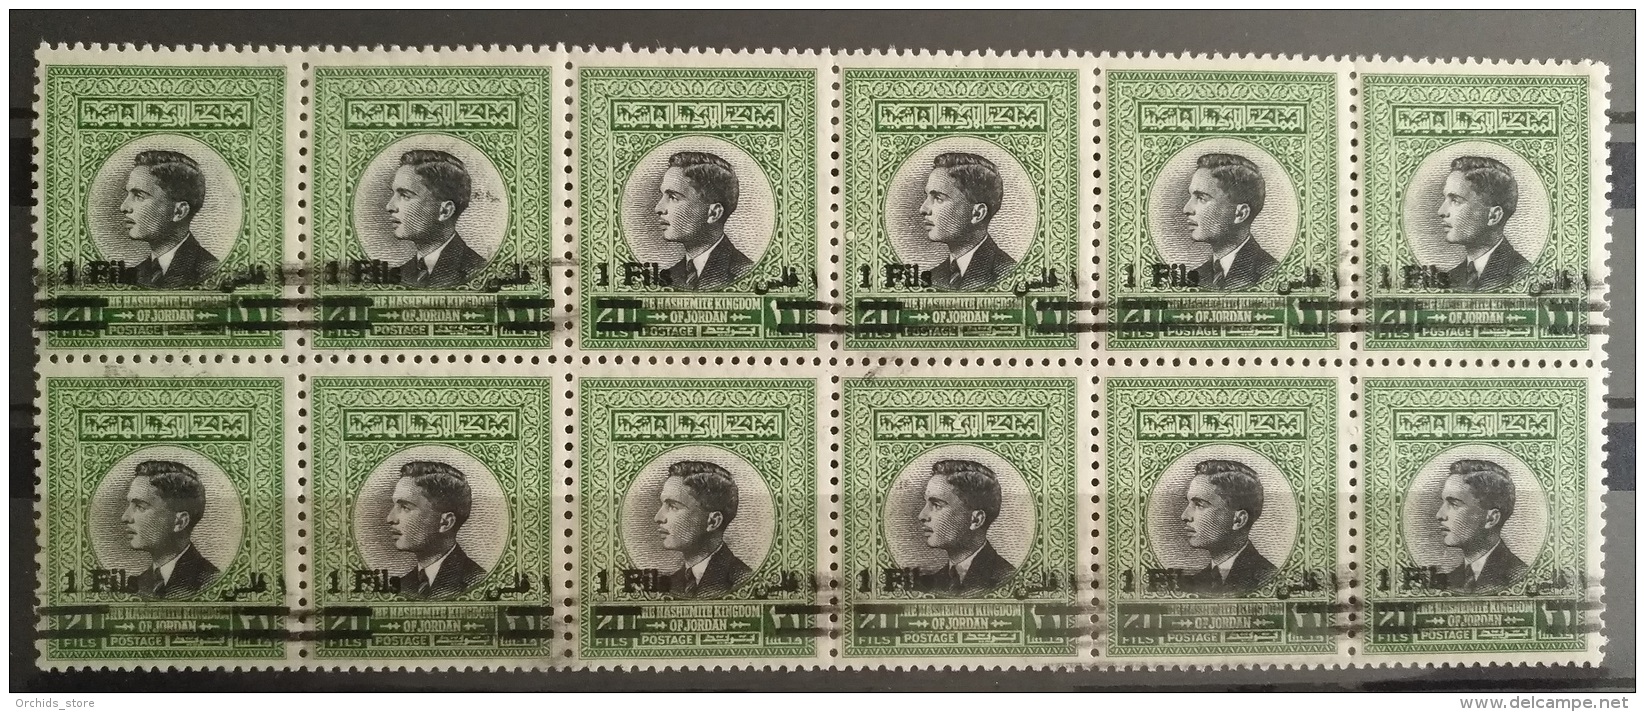 J27 - Jordan 1963 SG 539 Blk/12 MNH King Hussein 21f SuNew Value, Overprint Variety - Jordan